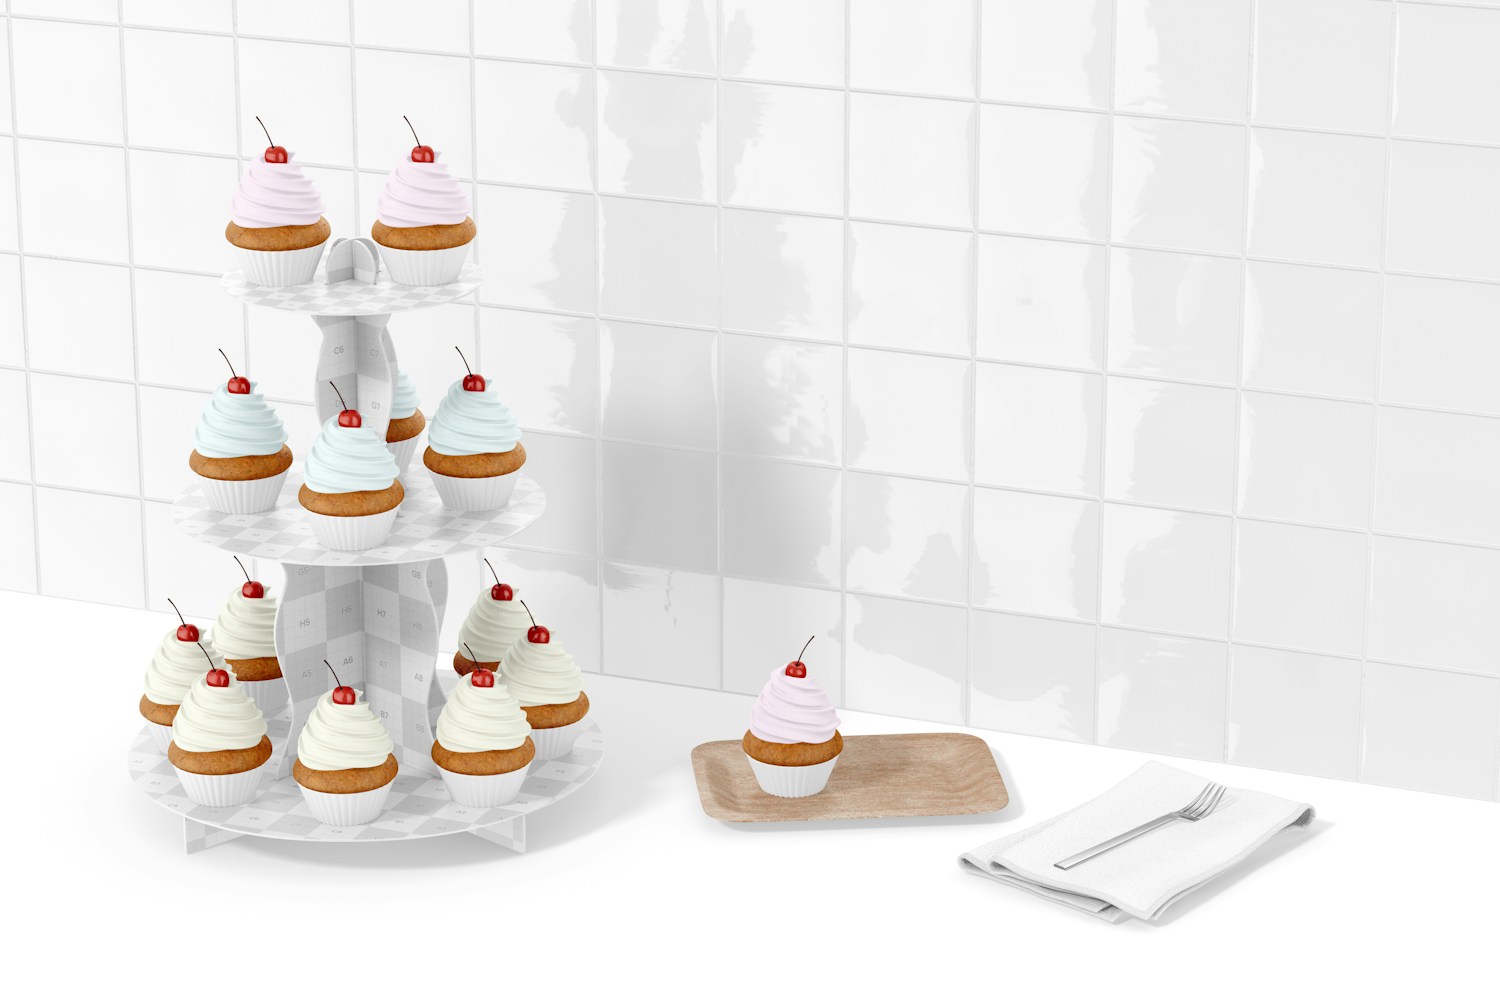 3-Tier Cardboard Cupcake Stand Mockup, Perspective